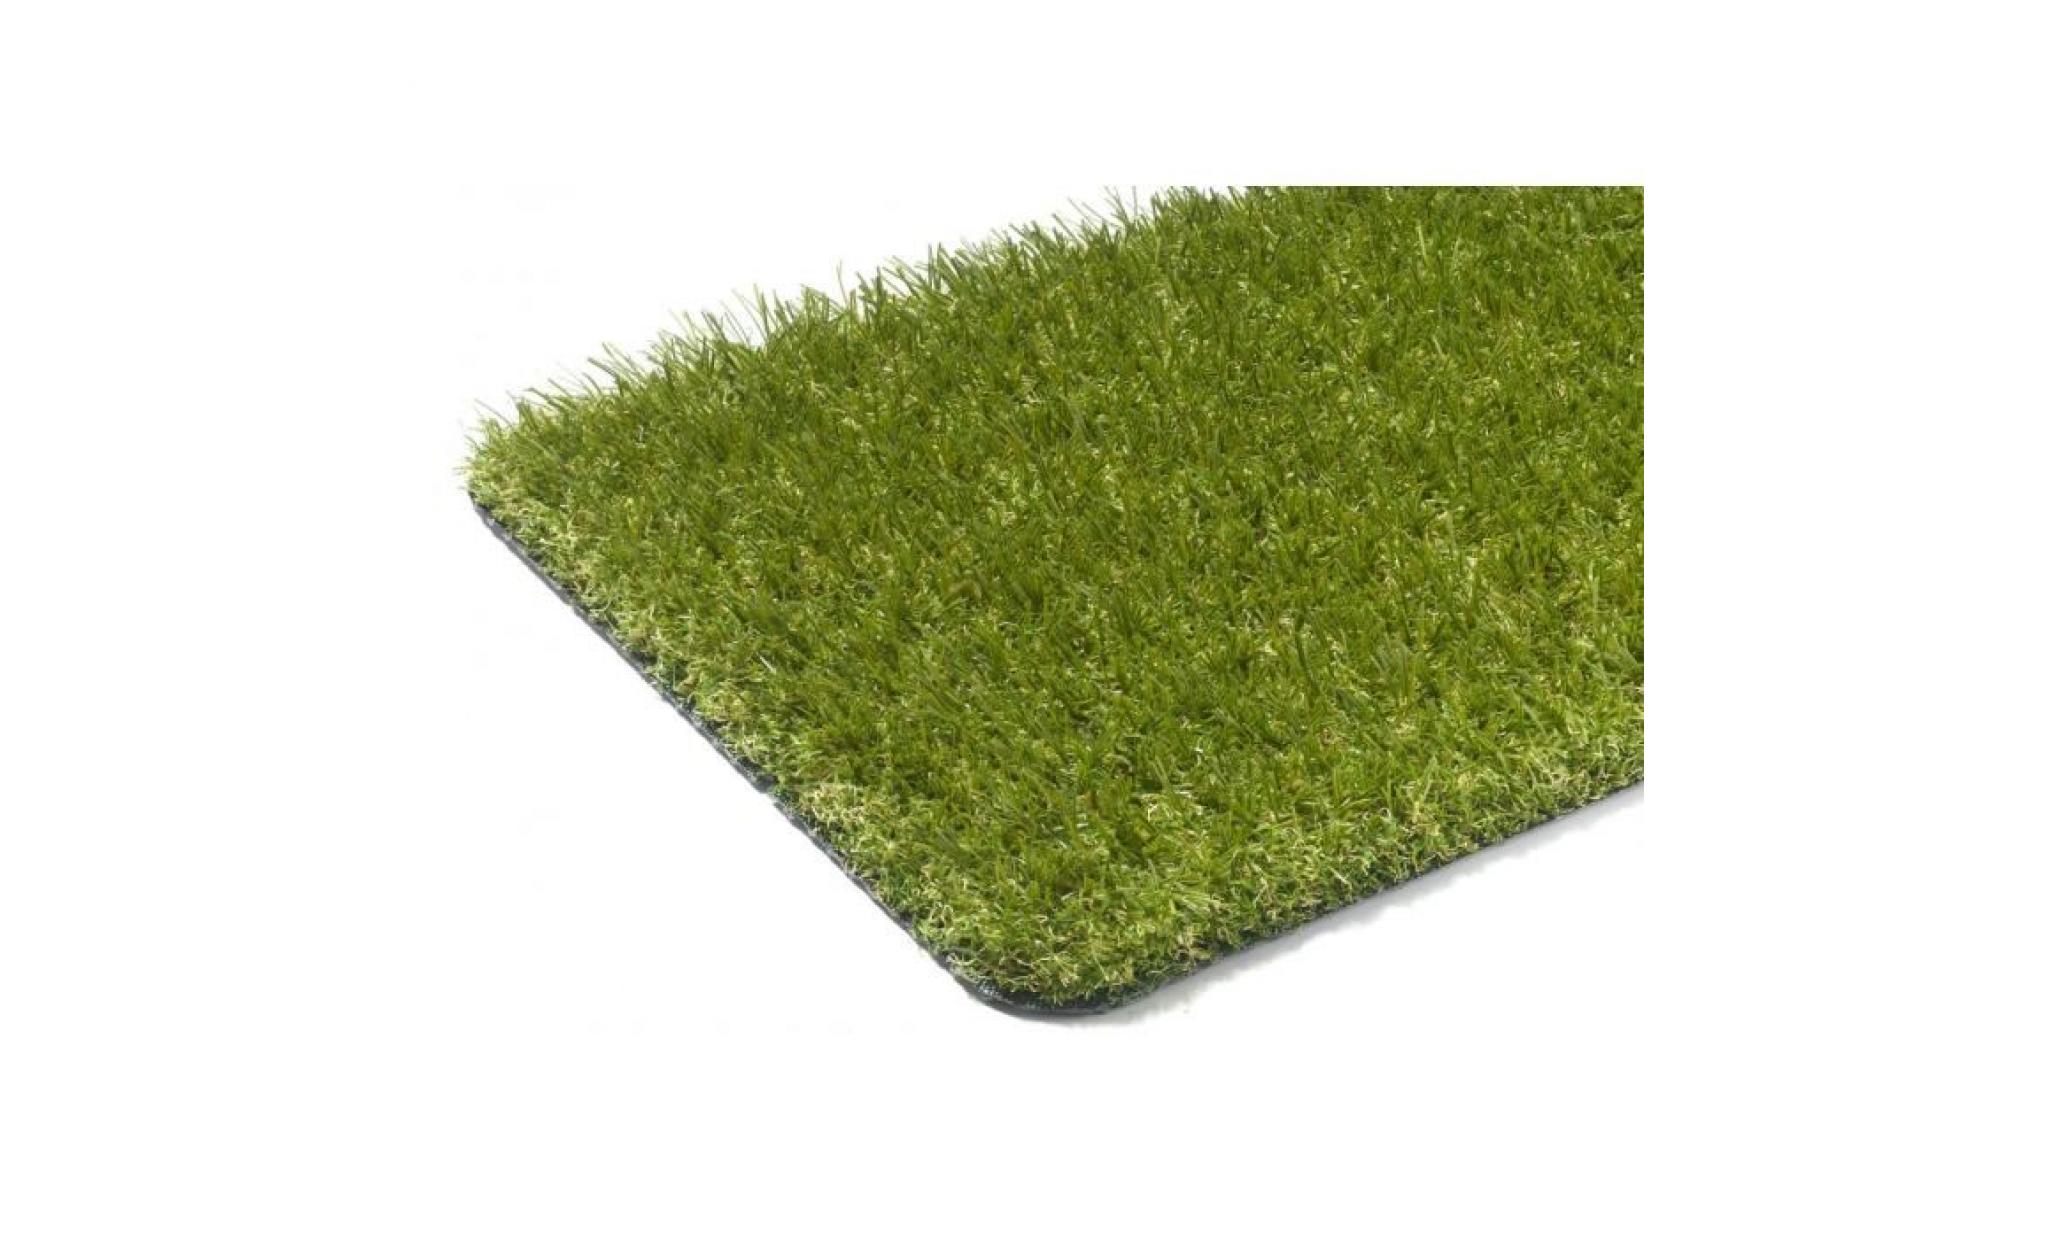 wembley   tapis type luxe gazon artificiel – pour jardin, terrasse, balcon   vert  [200x300 cm]